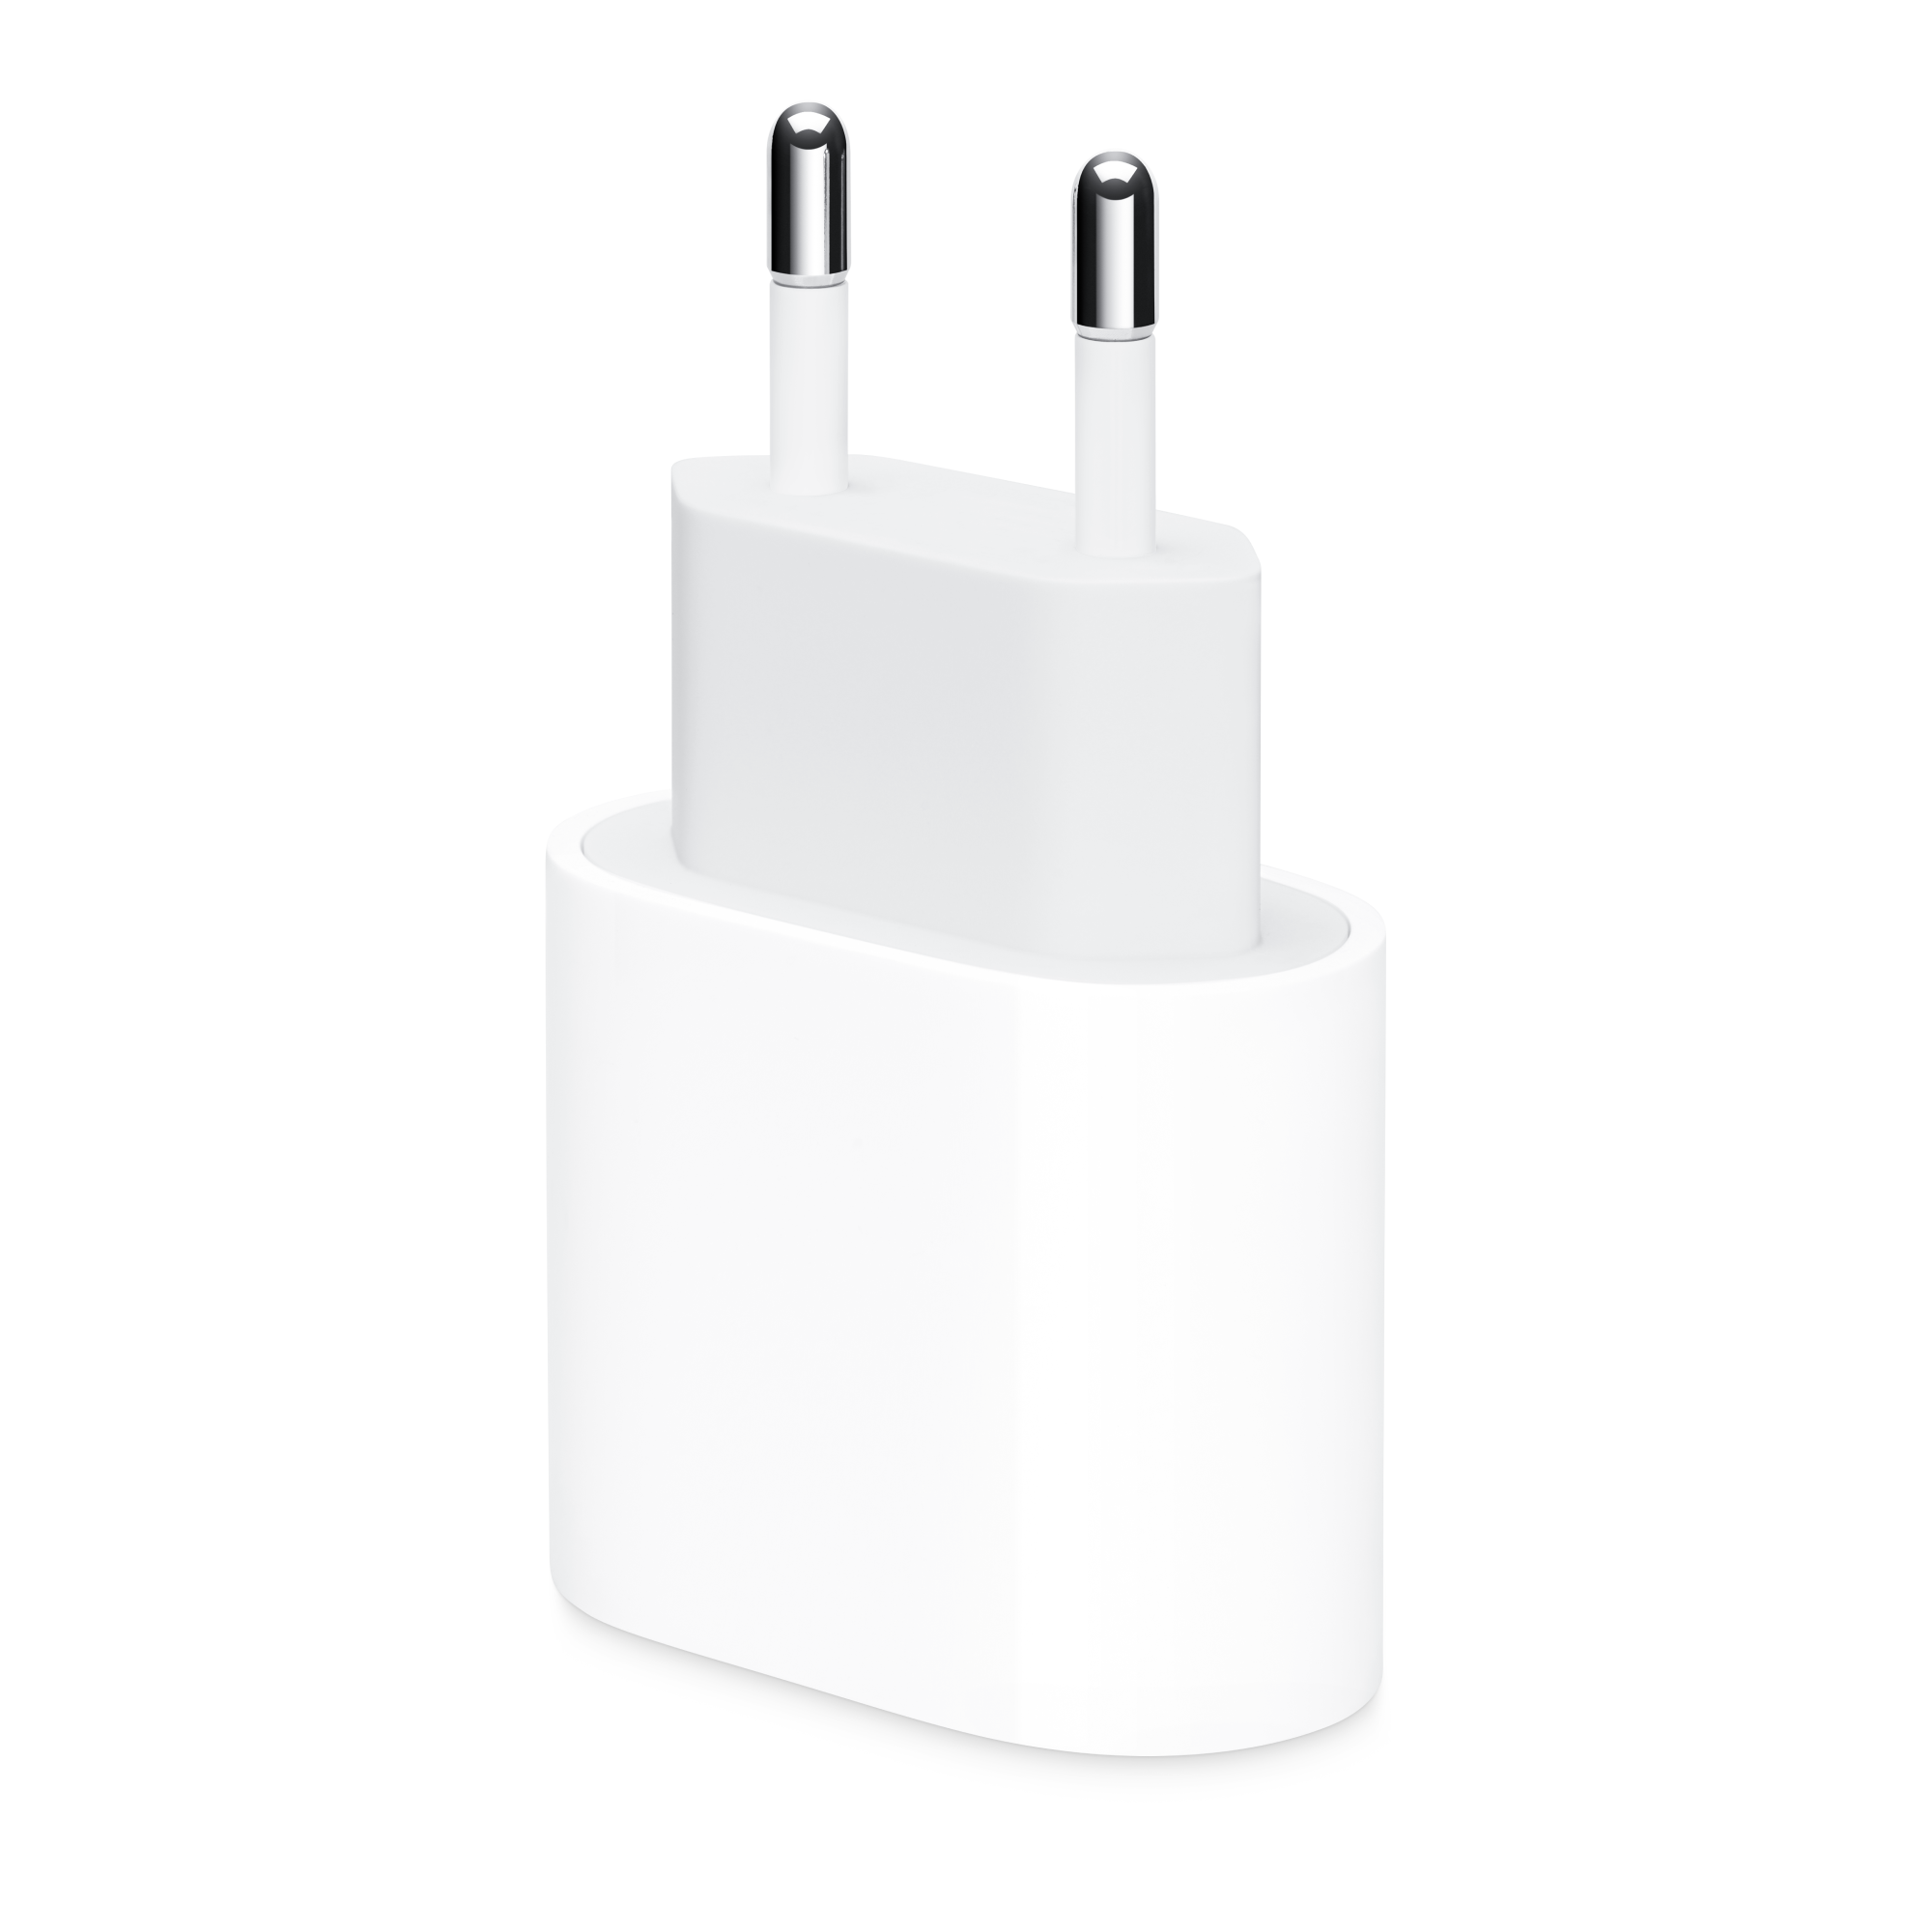 Cable de conector Lightning a USB (50 cm) – Rossellimac